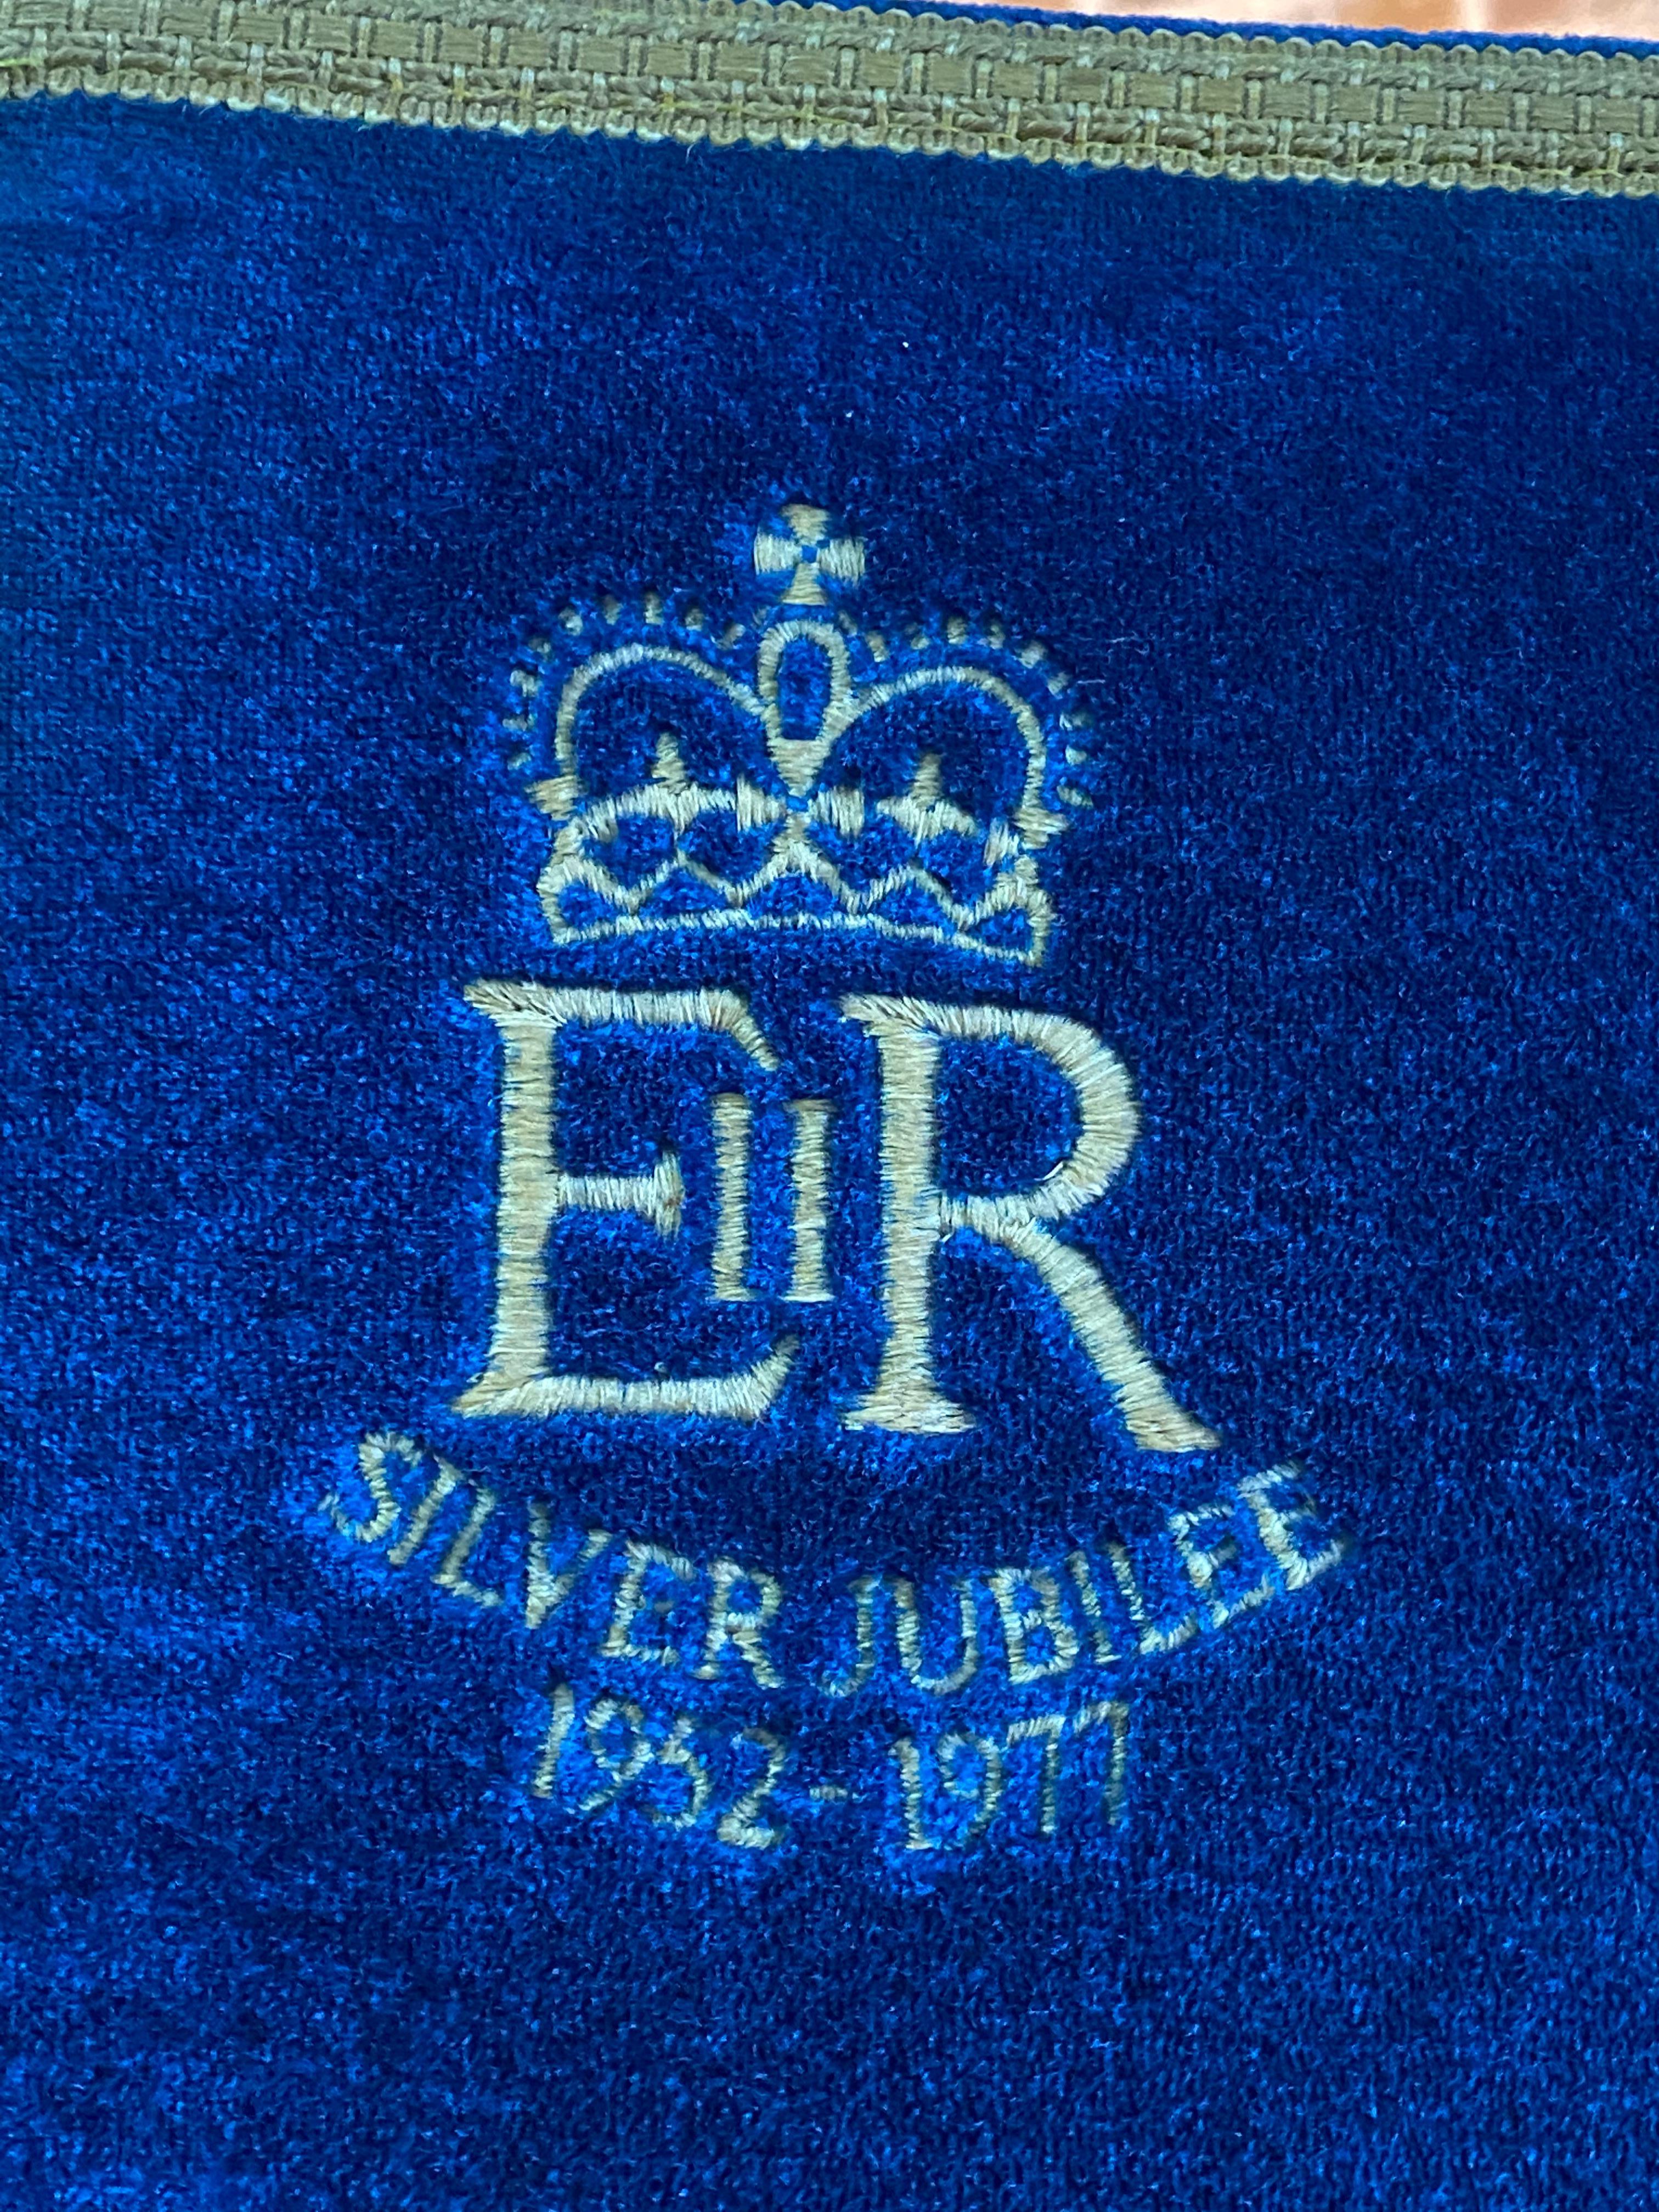 Victorian Queen Elizabeth II Silver Jubilee Coronation Peers Chairs Set of 4, 1952-1977